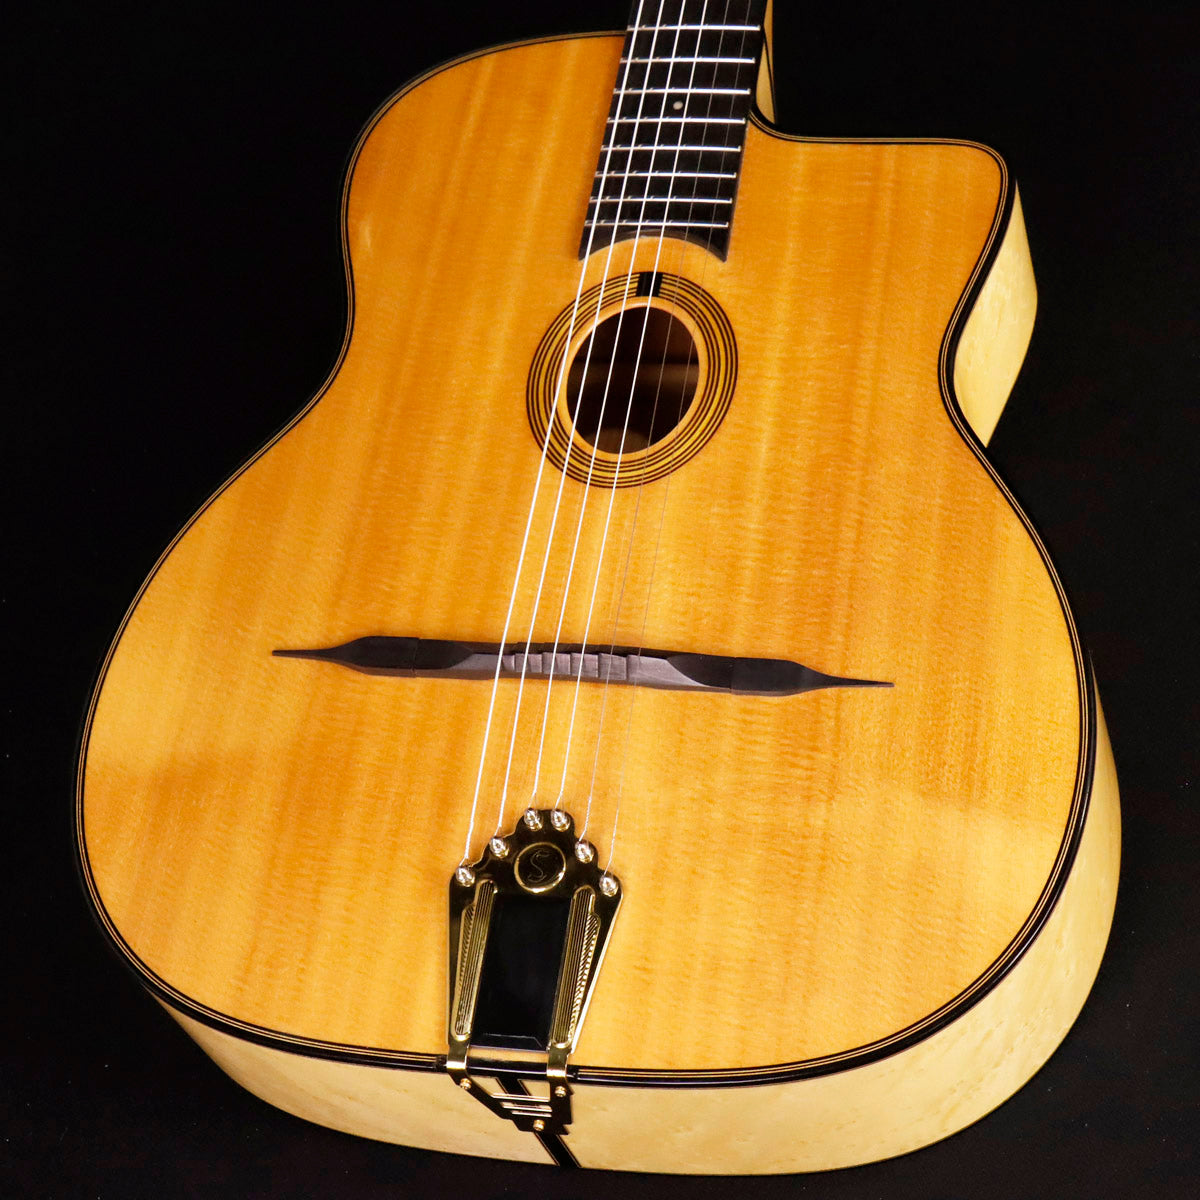 Maccaferri type [Acoustic guitar/Electric guitar › Maccaferri type]